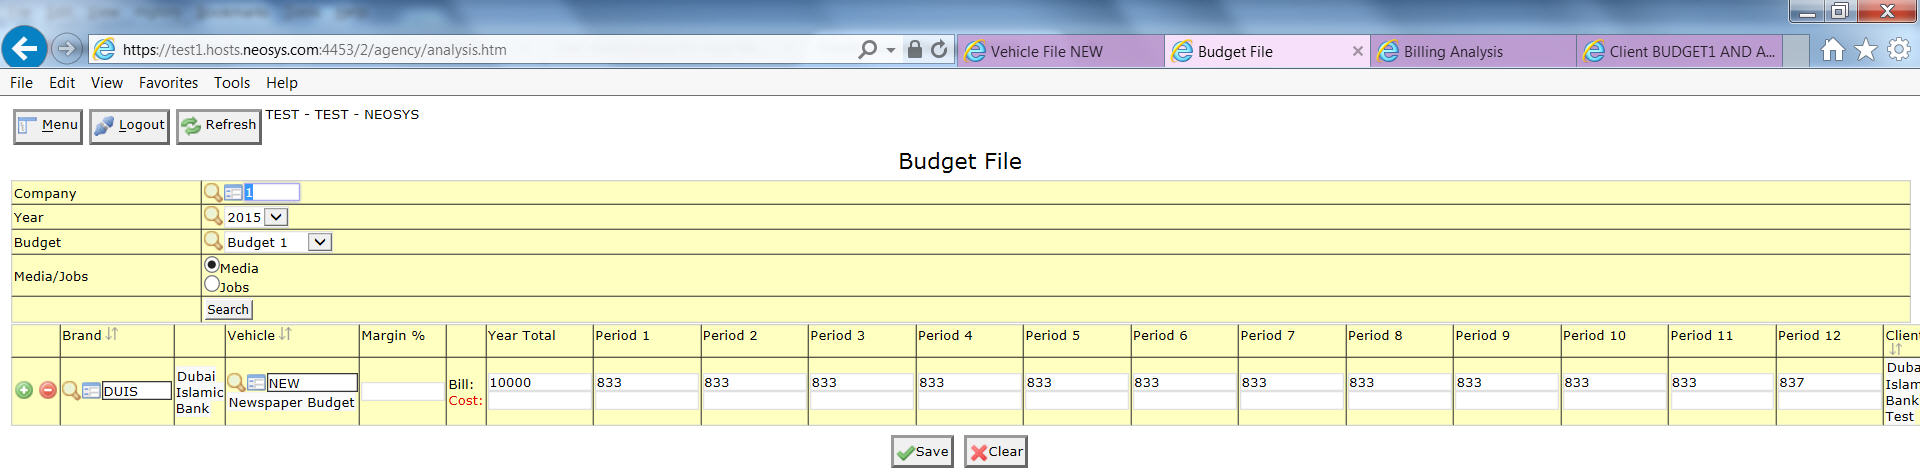 File:Mt budgetfile.jpg